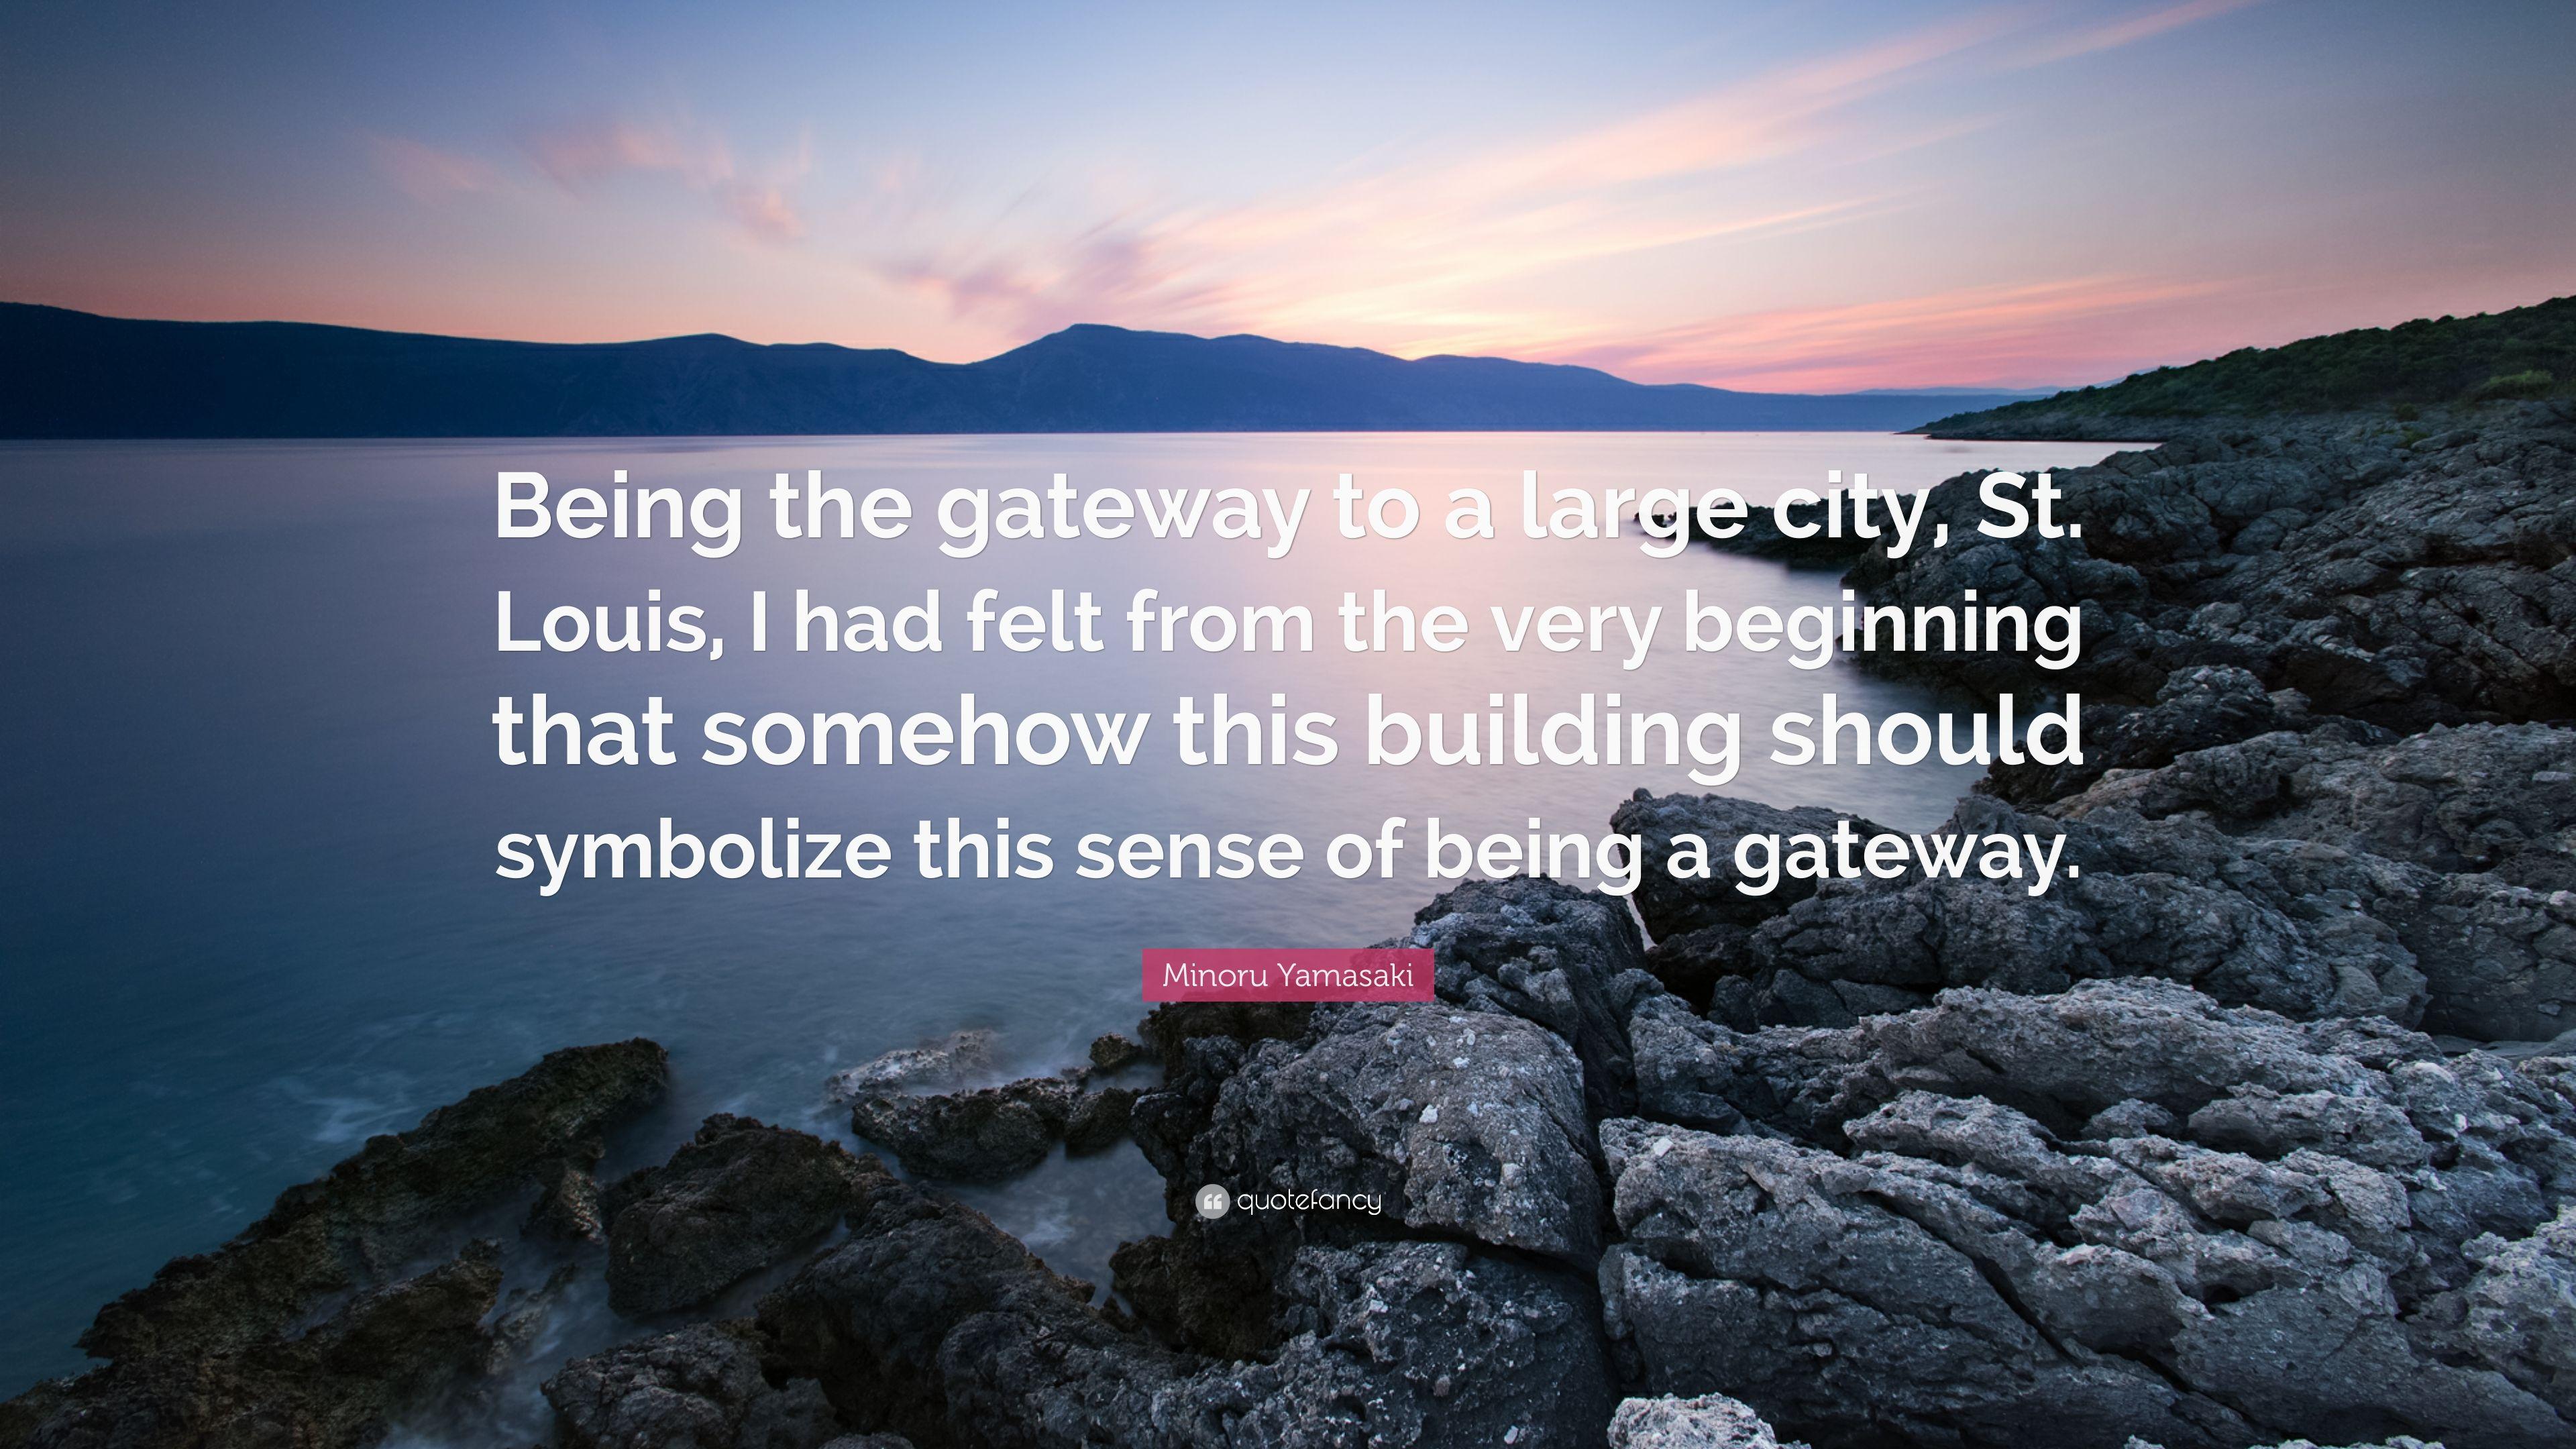 Minoru Yamasaki Quote: “Being the gateway to a large city, St. Louis